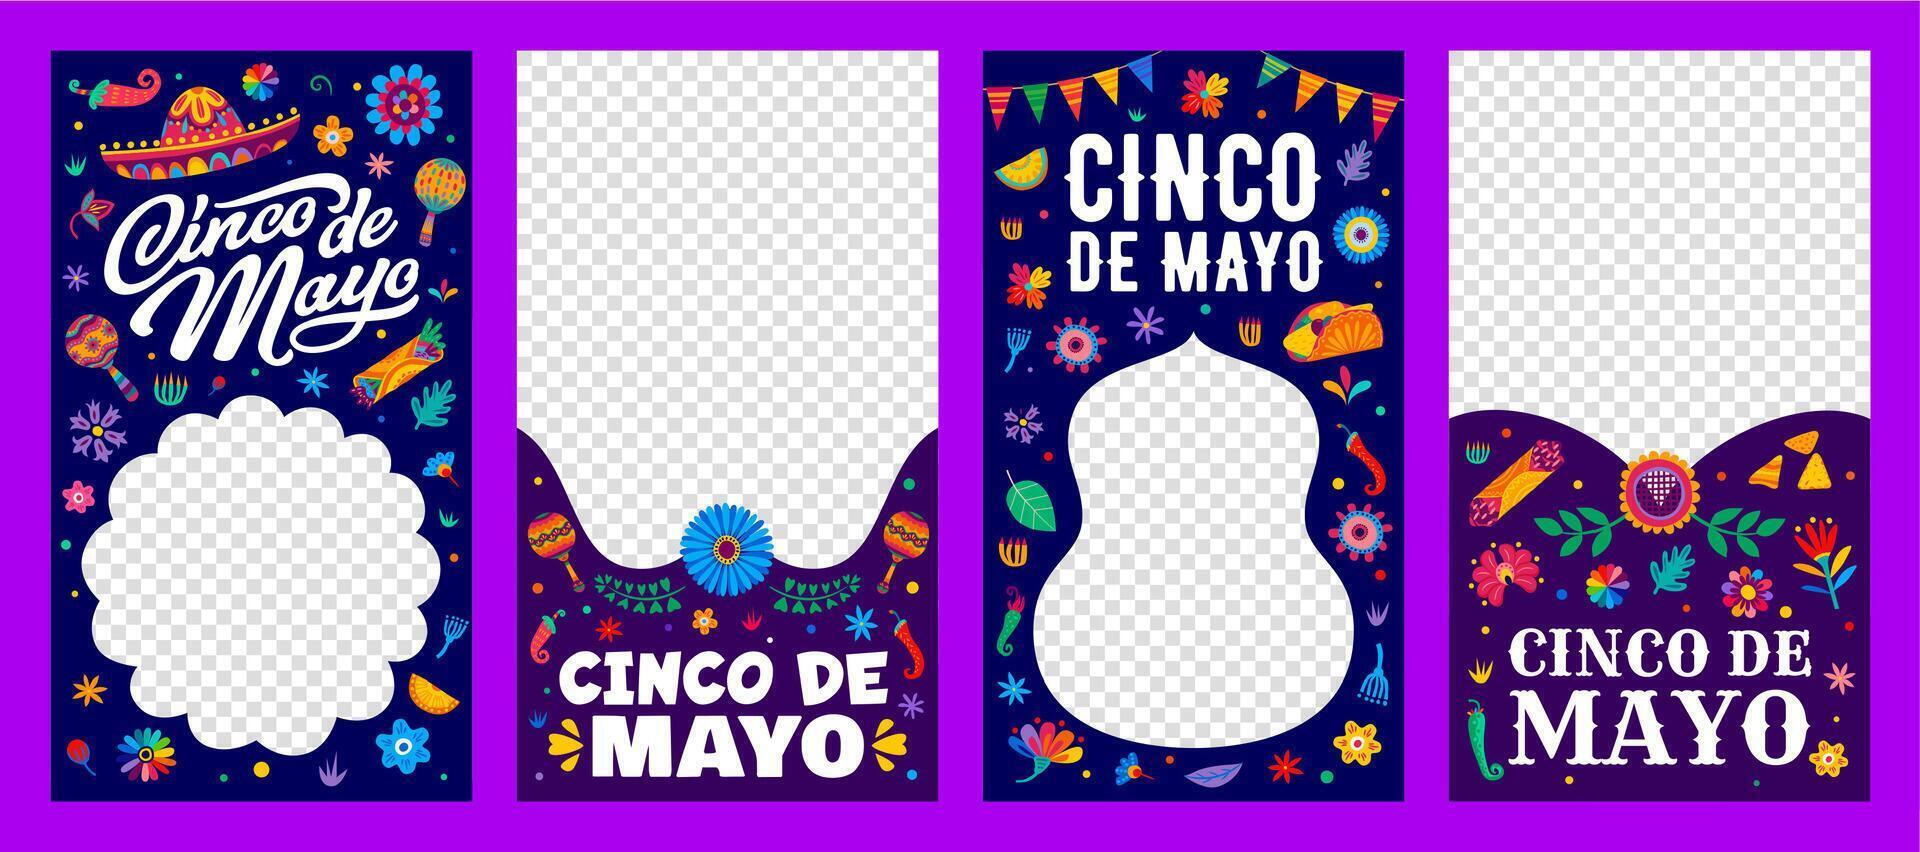 Cinco de mayo mexico holiday social media template vector